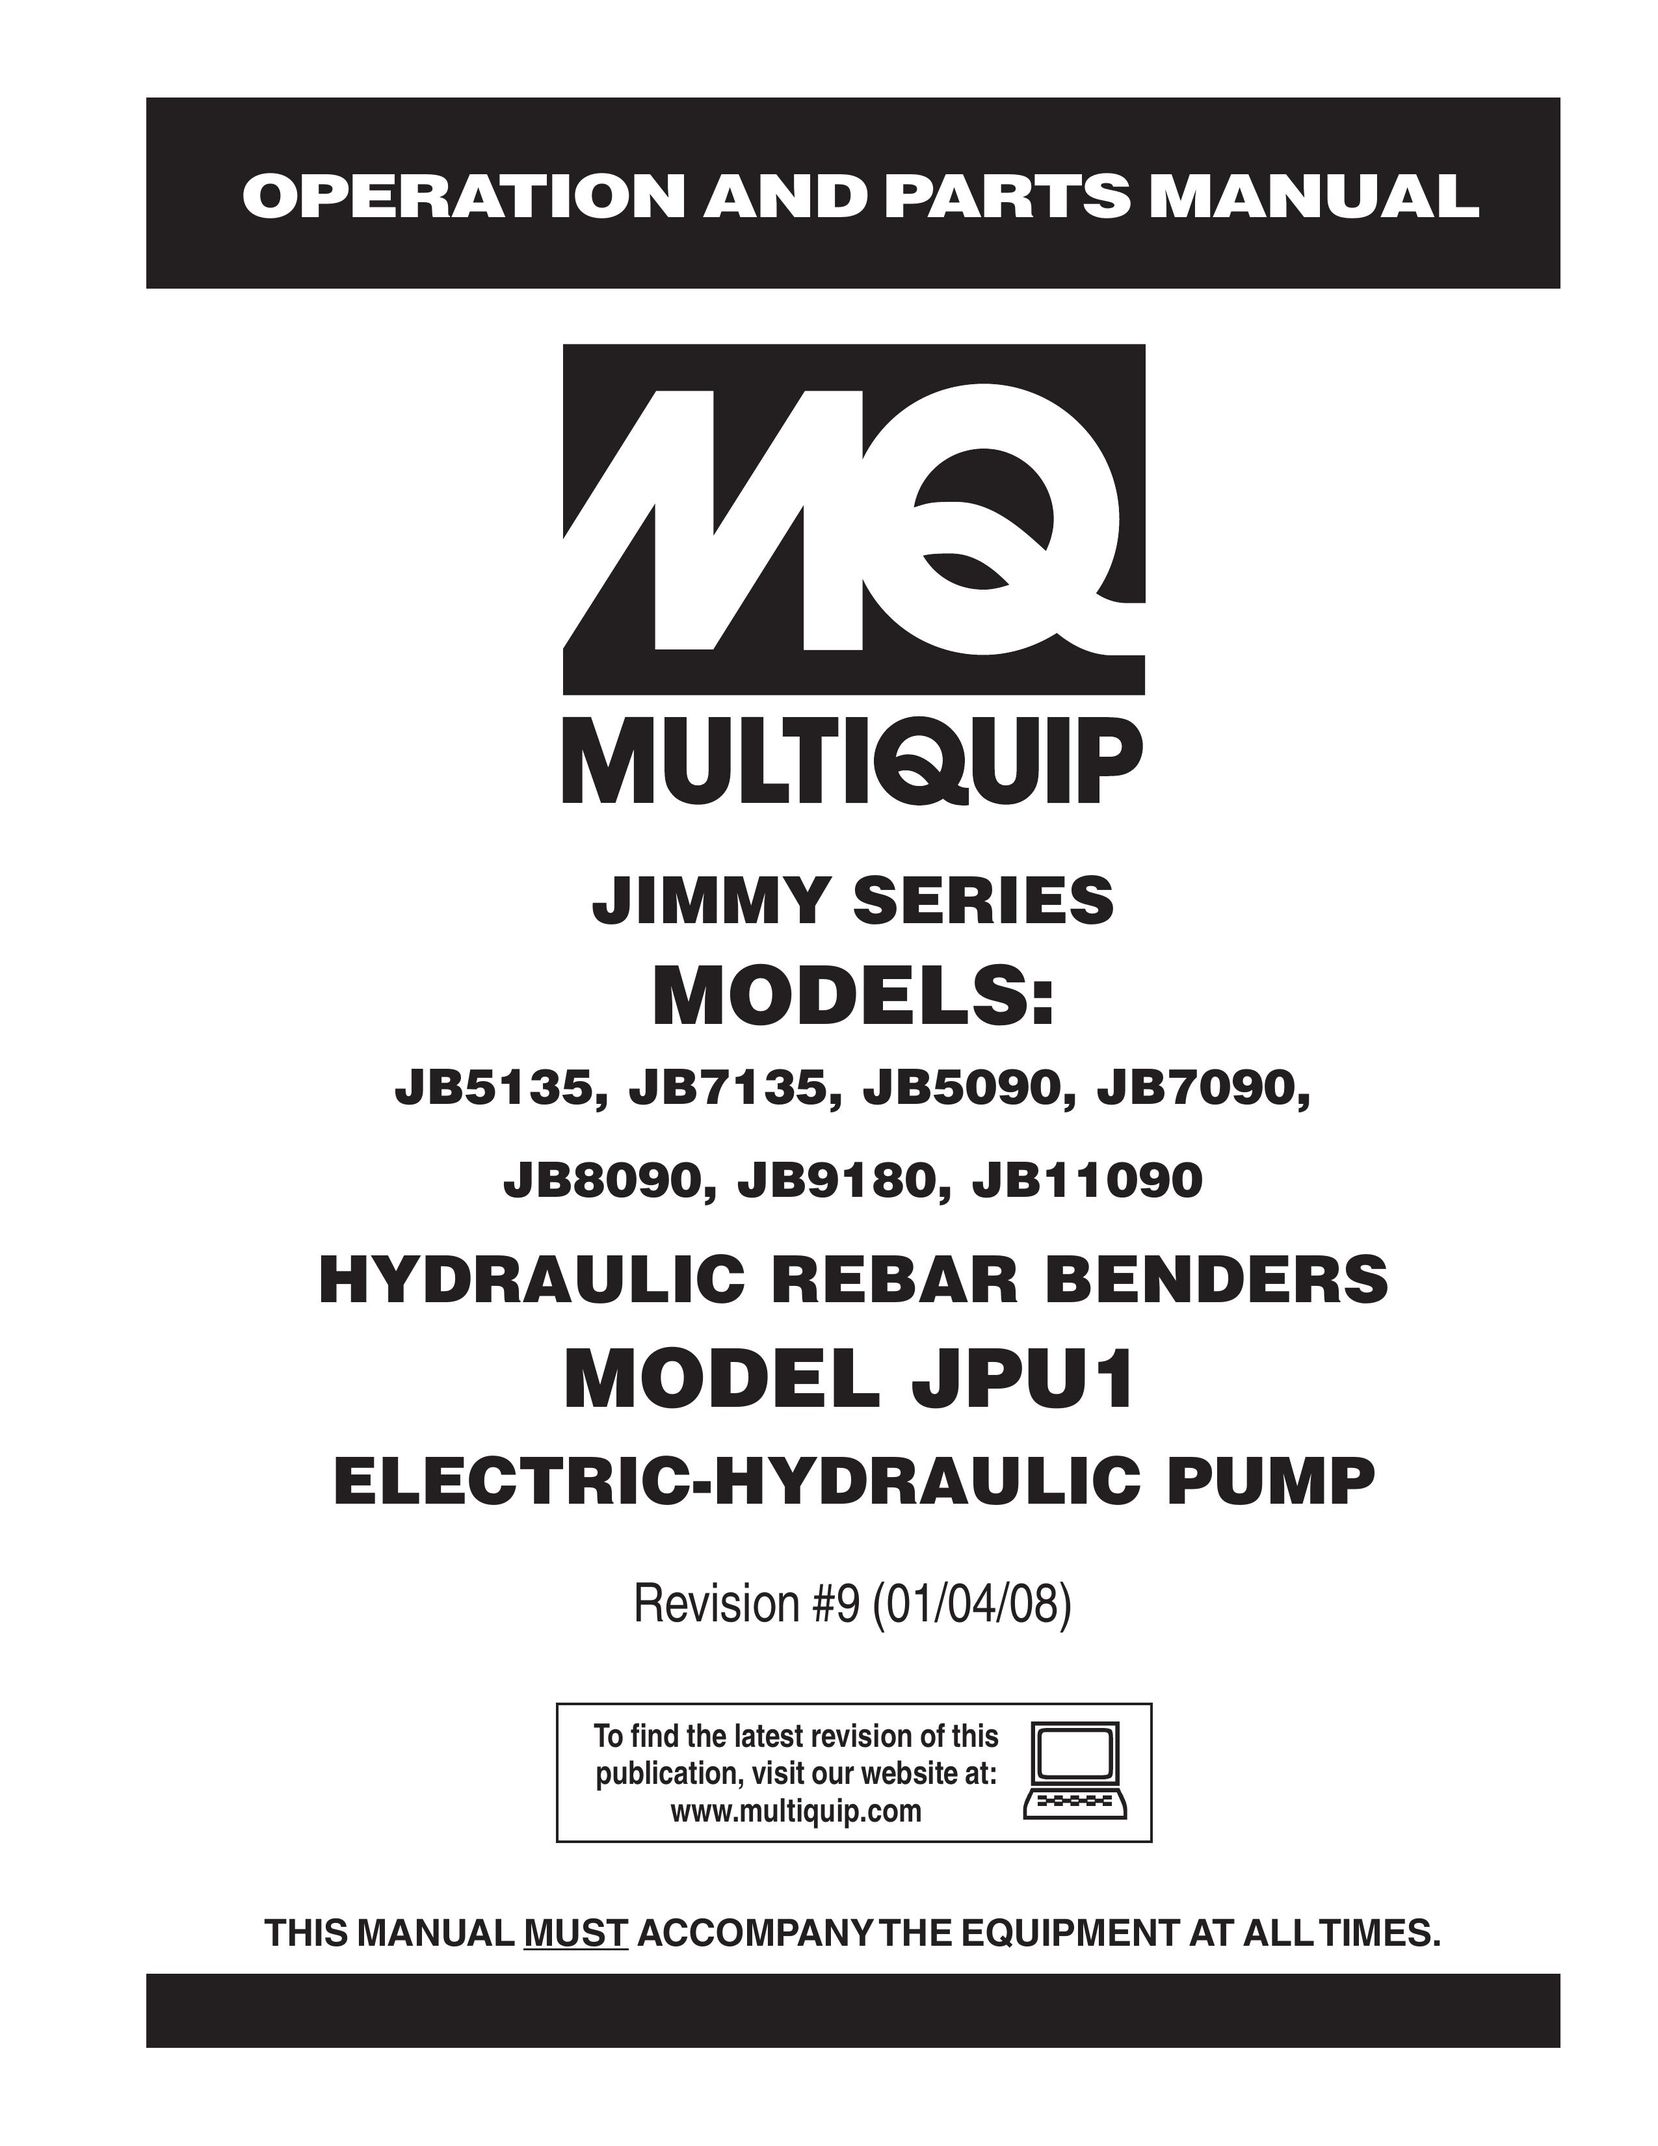 Multiquip JB11090 Heat Pump User Manual